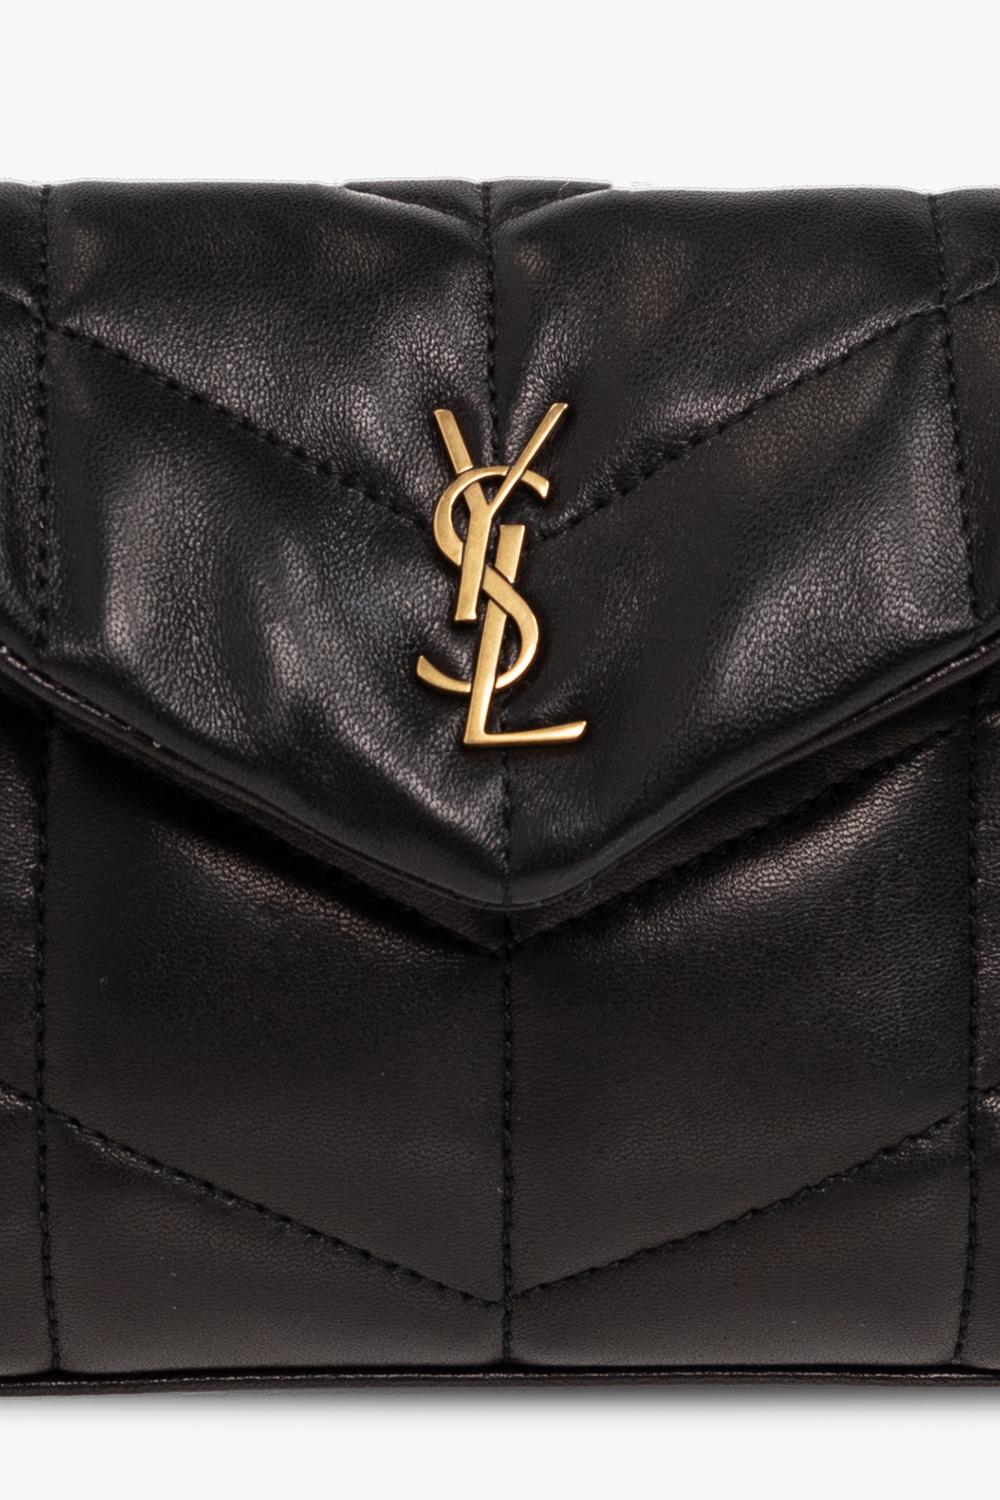 YSL puffer bag mini black 2021 #yslpuffer #yslpufferminibag  #preownedauthenticbranded #prelovedauthenticbranded #originalbranded  #authentic…